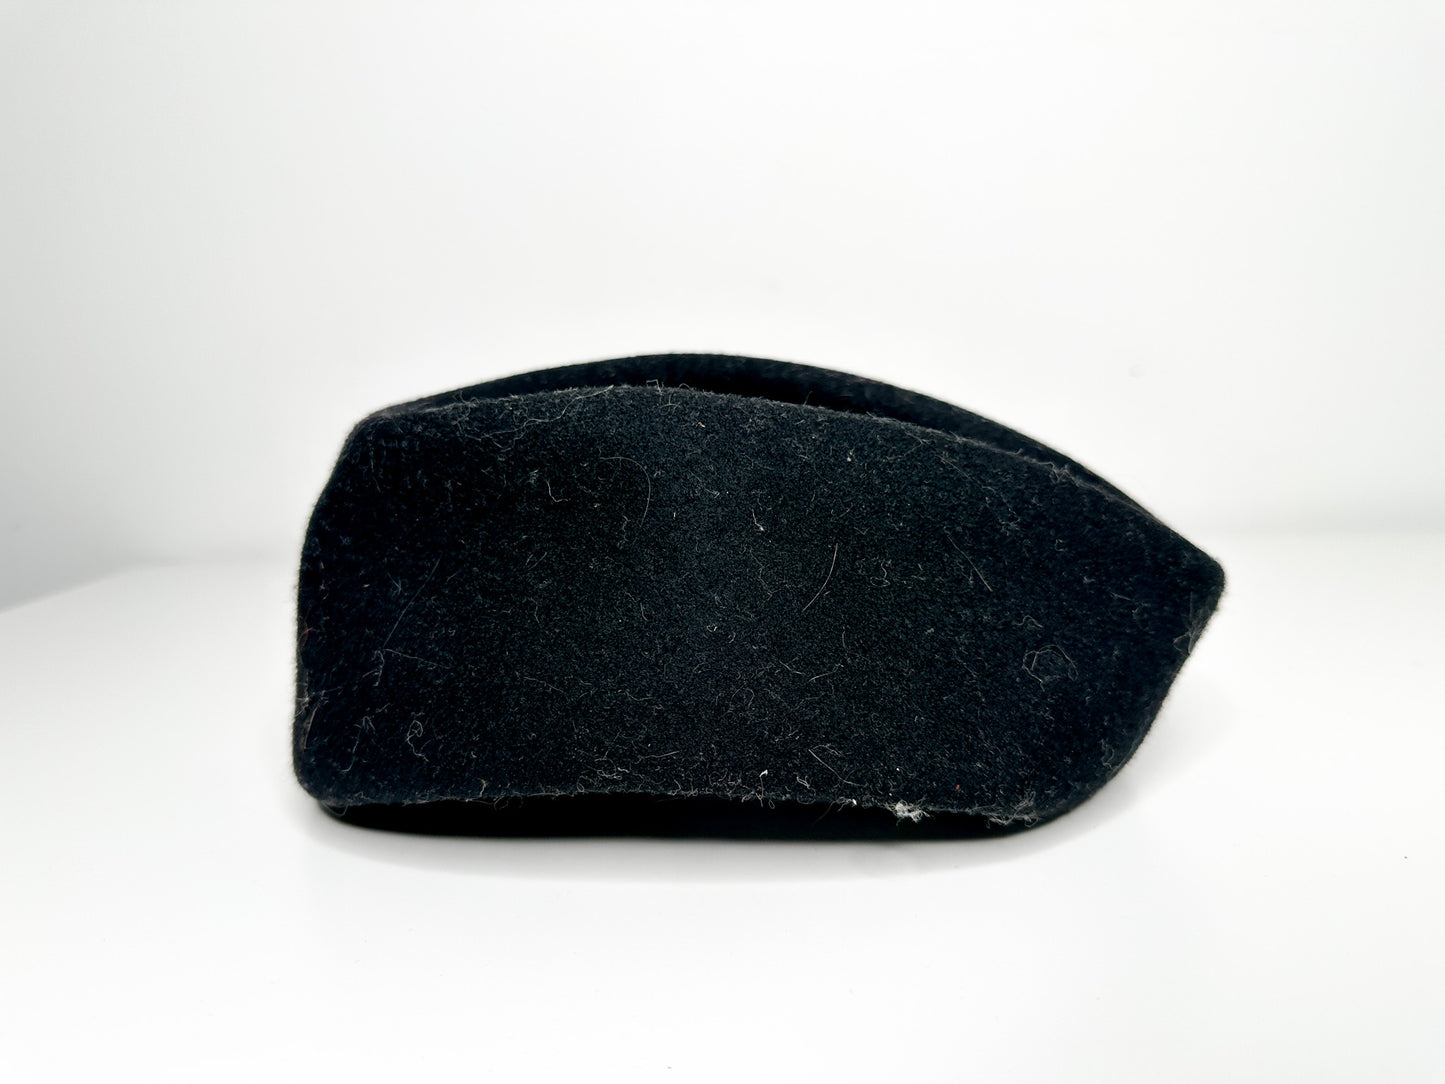 Fascinator Hat |1940s Black Fascinator | Black Wool Hat| Racetrack Hat| Wedding Fascinator|Church Hat|Made in Italy